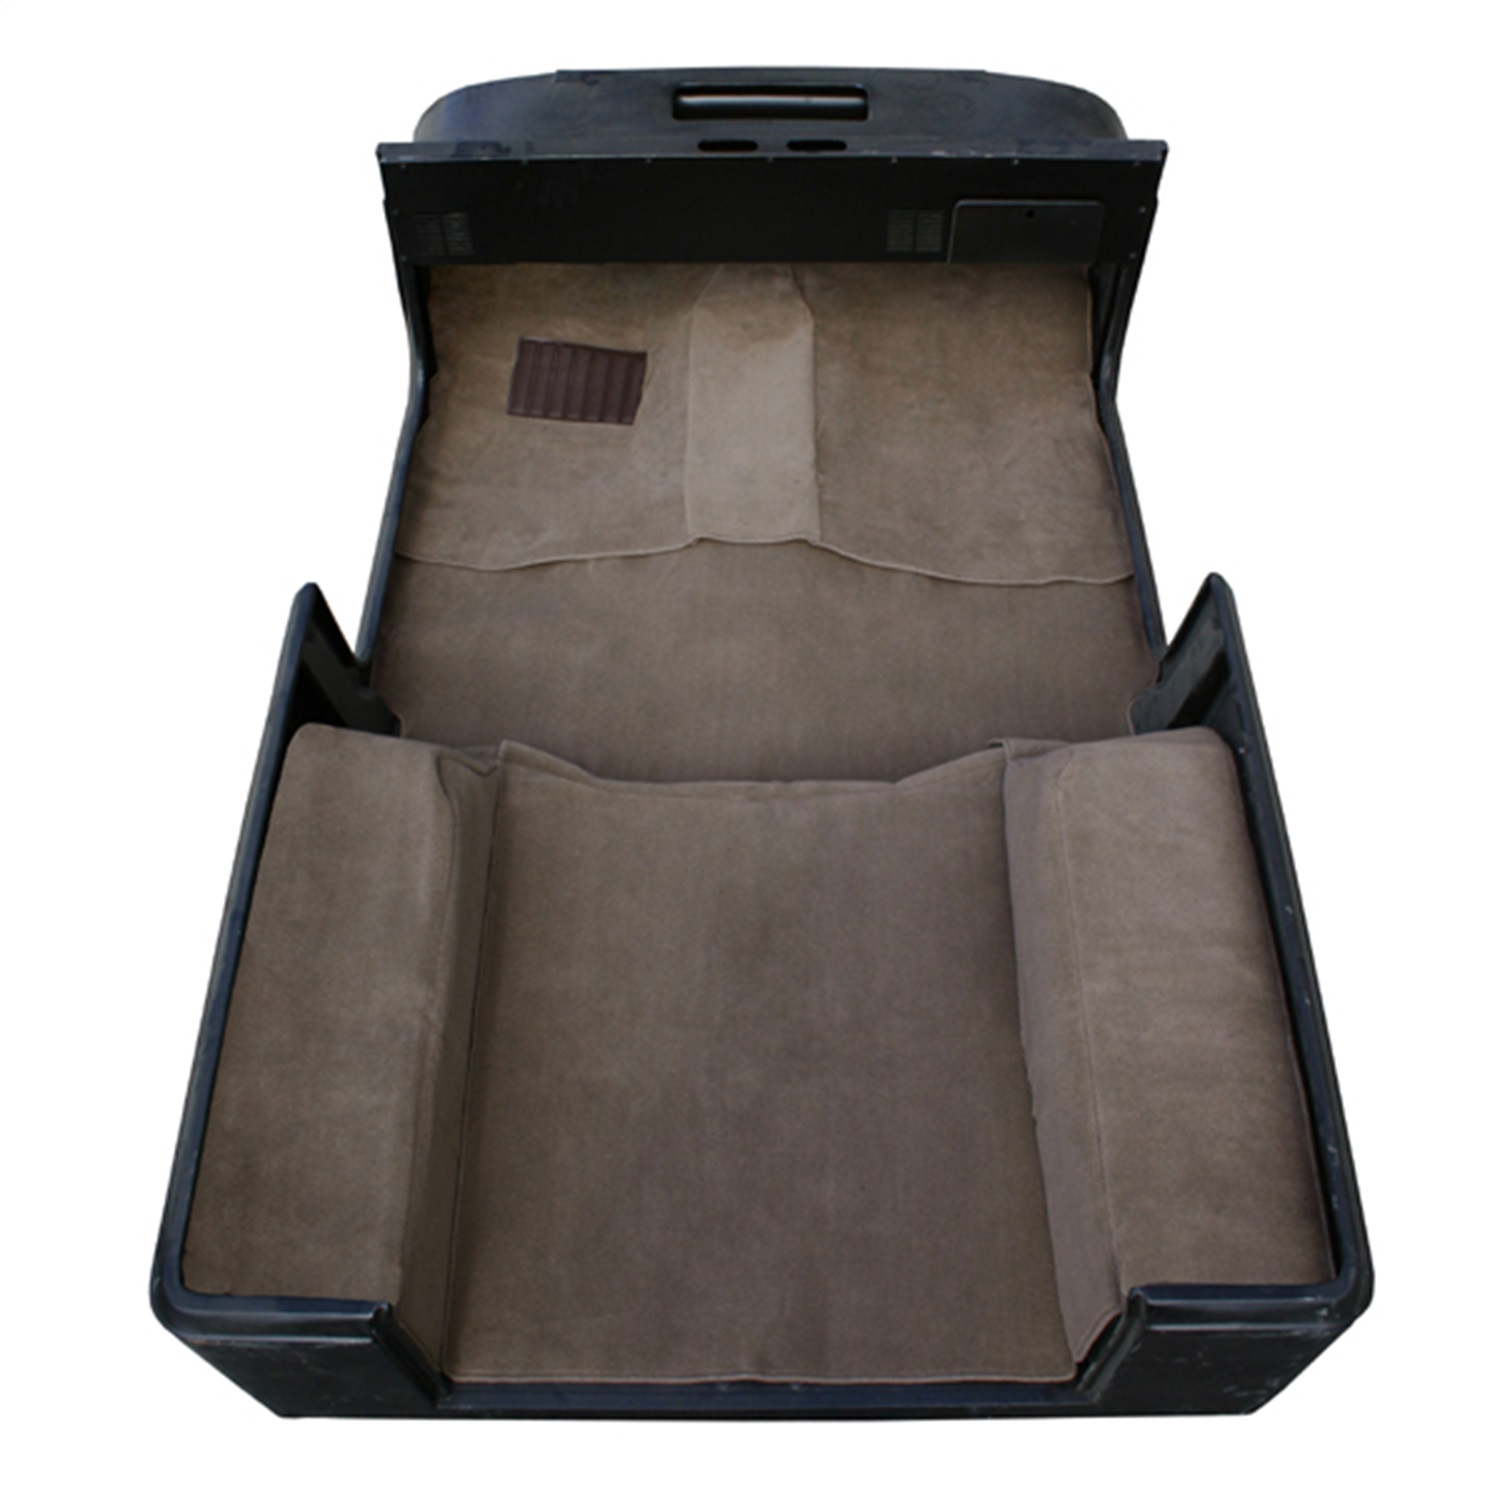 Rugged Ridge 13695.10 Deluxe Carpet Kit Fits 76-95 CJ7 Wrangler (YJ)